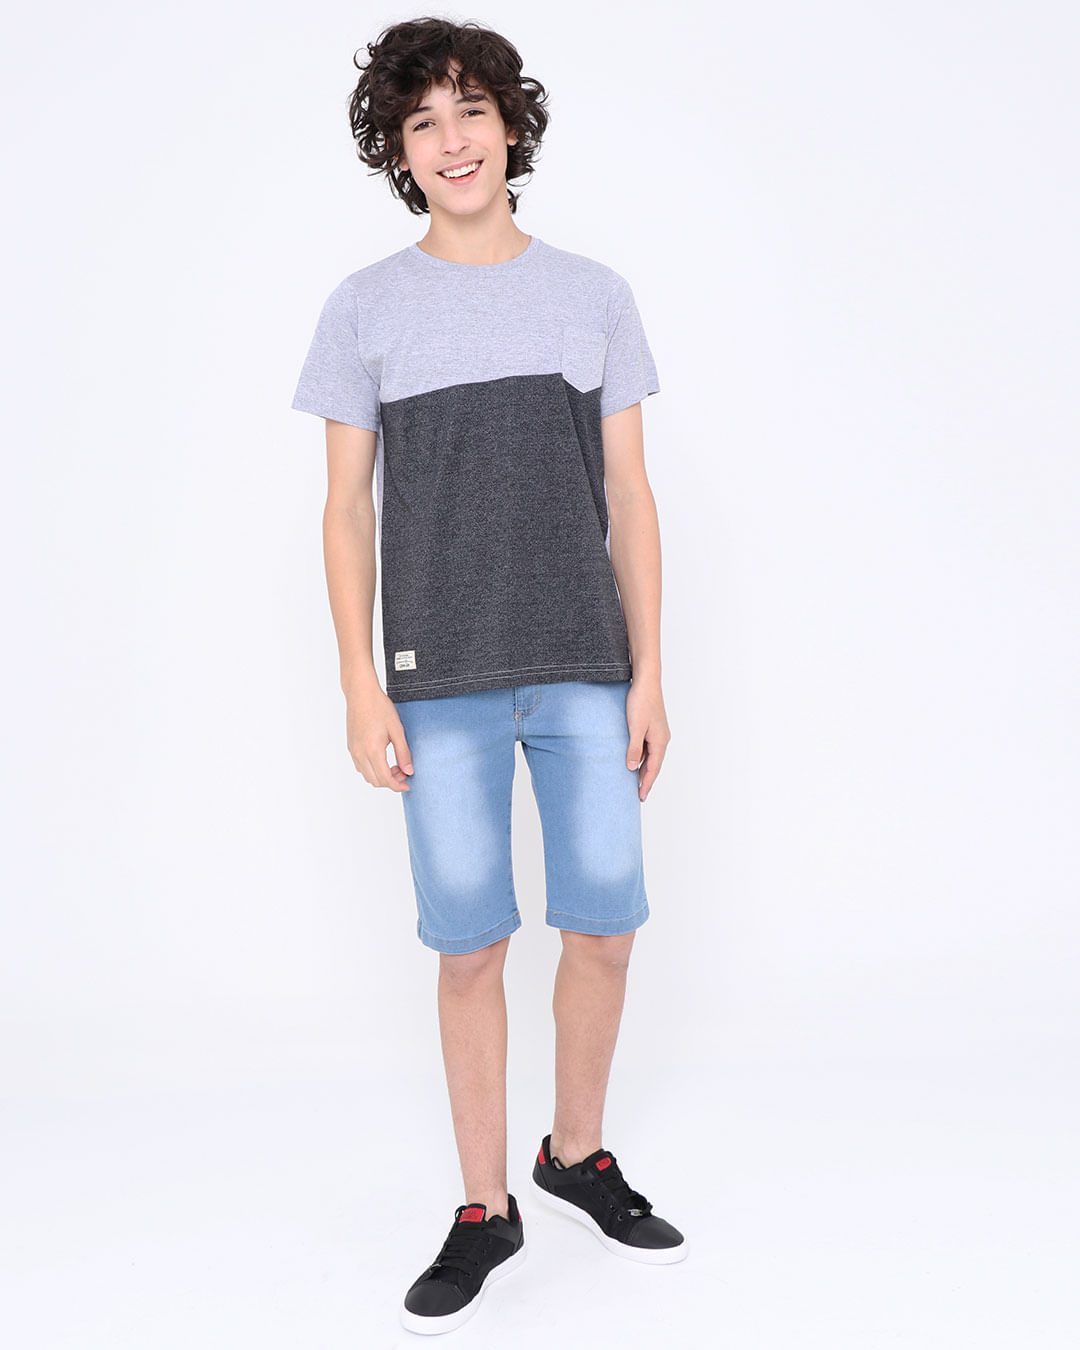 Camiseta-Juvenil-Manga-Curta-Com-Bolso-Multicor-Cinza